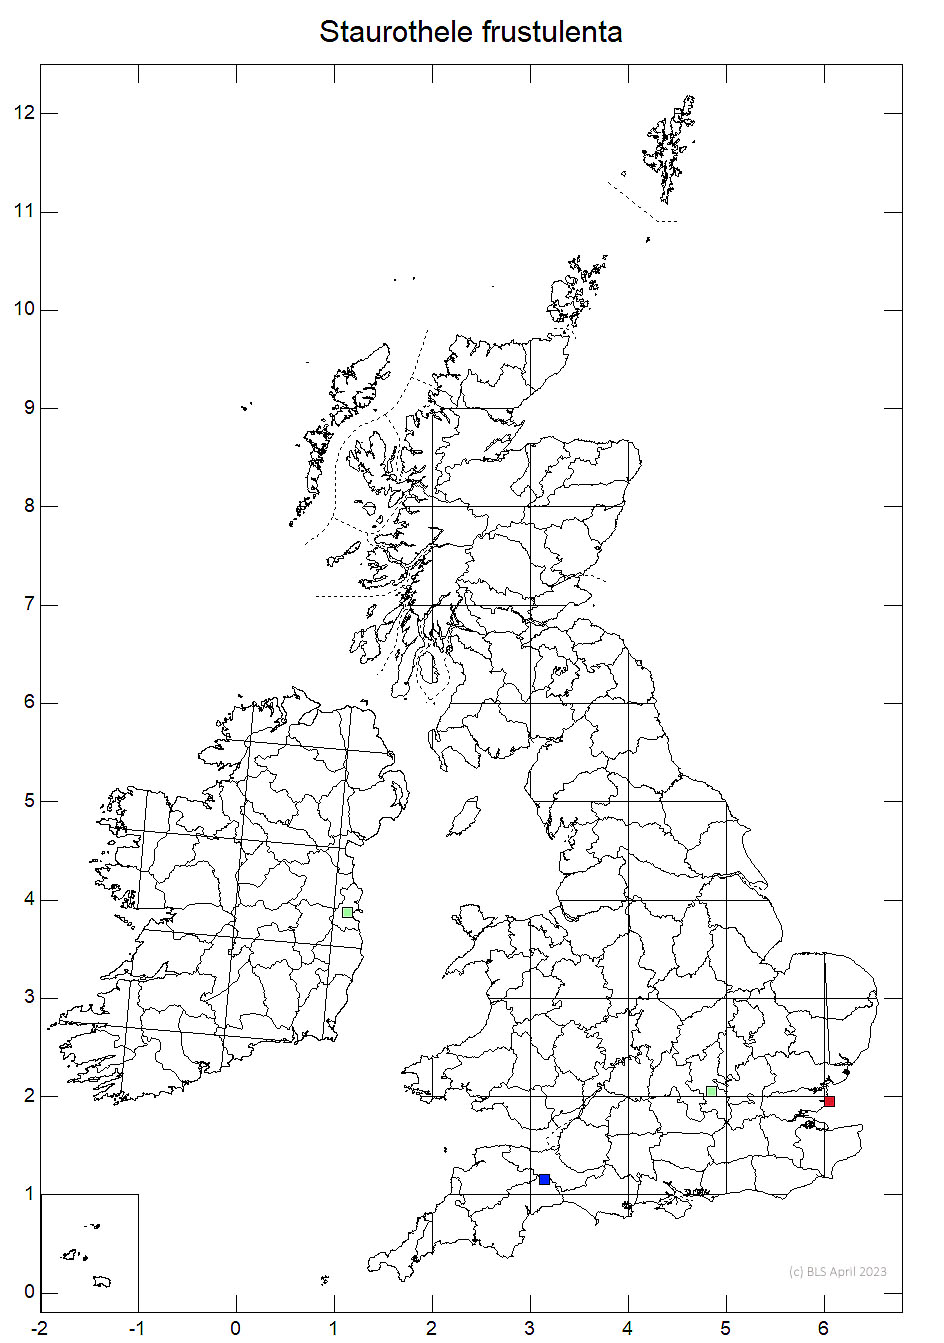 Staurothele frustulenta 10km sq distribution map